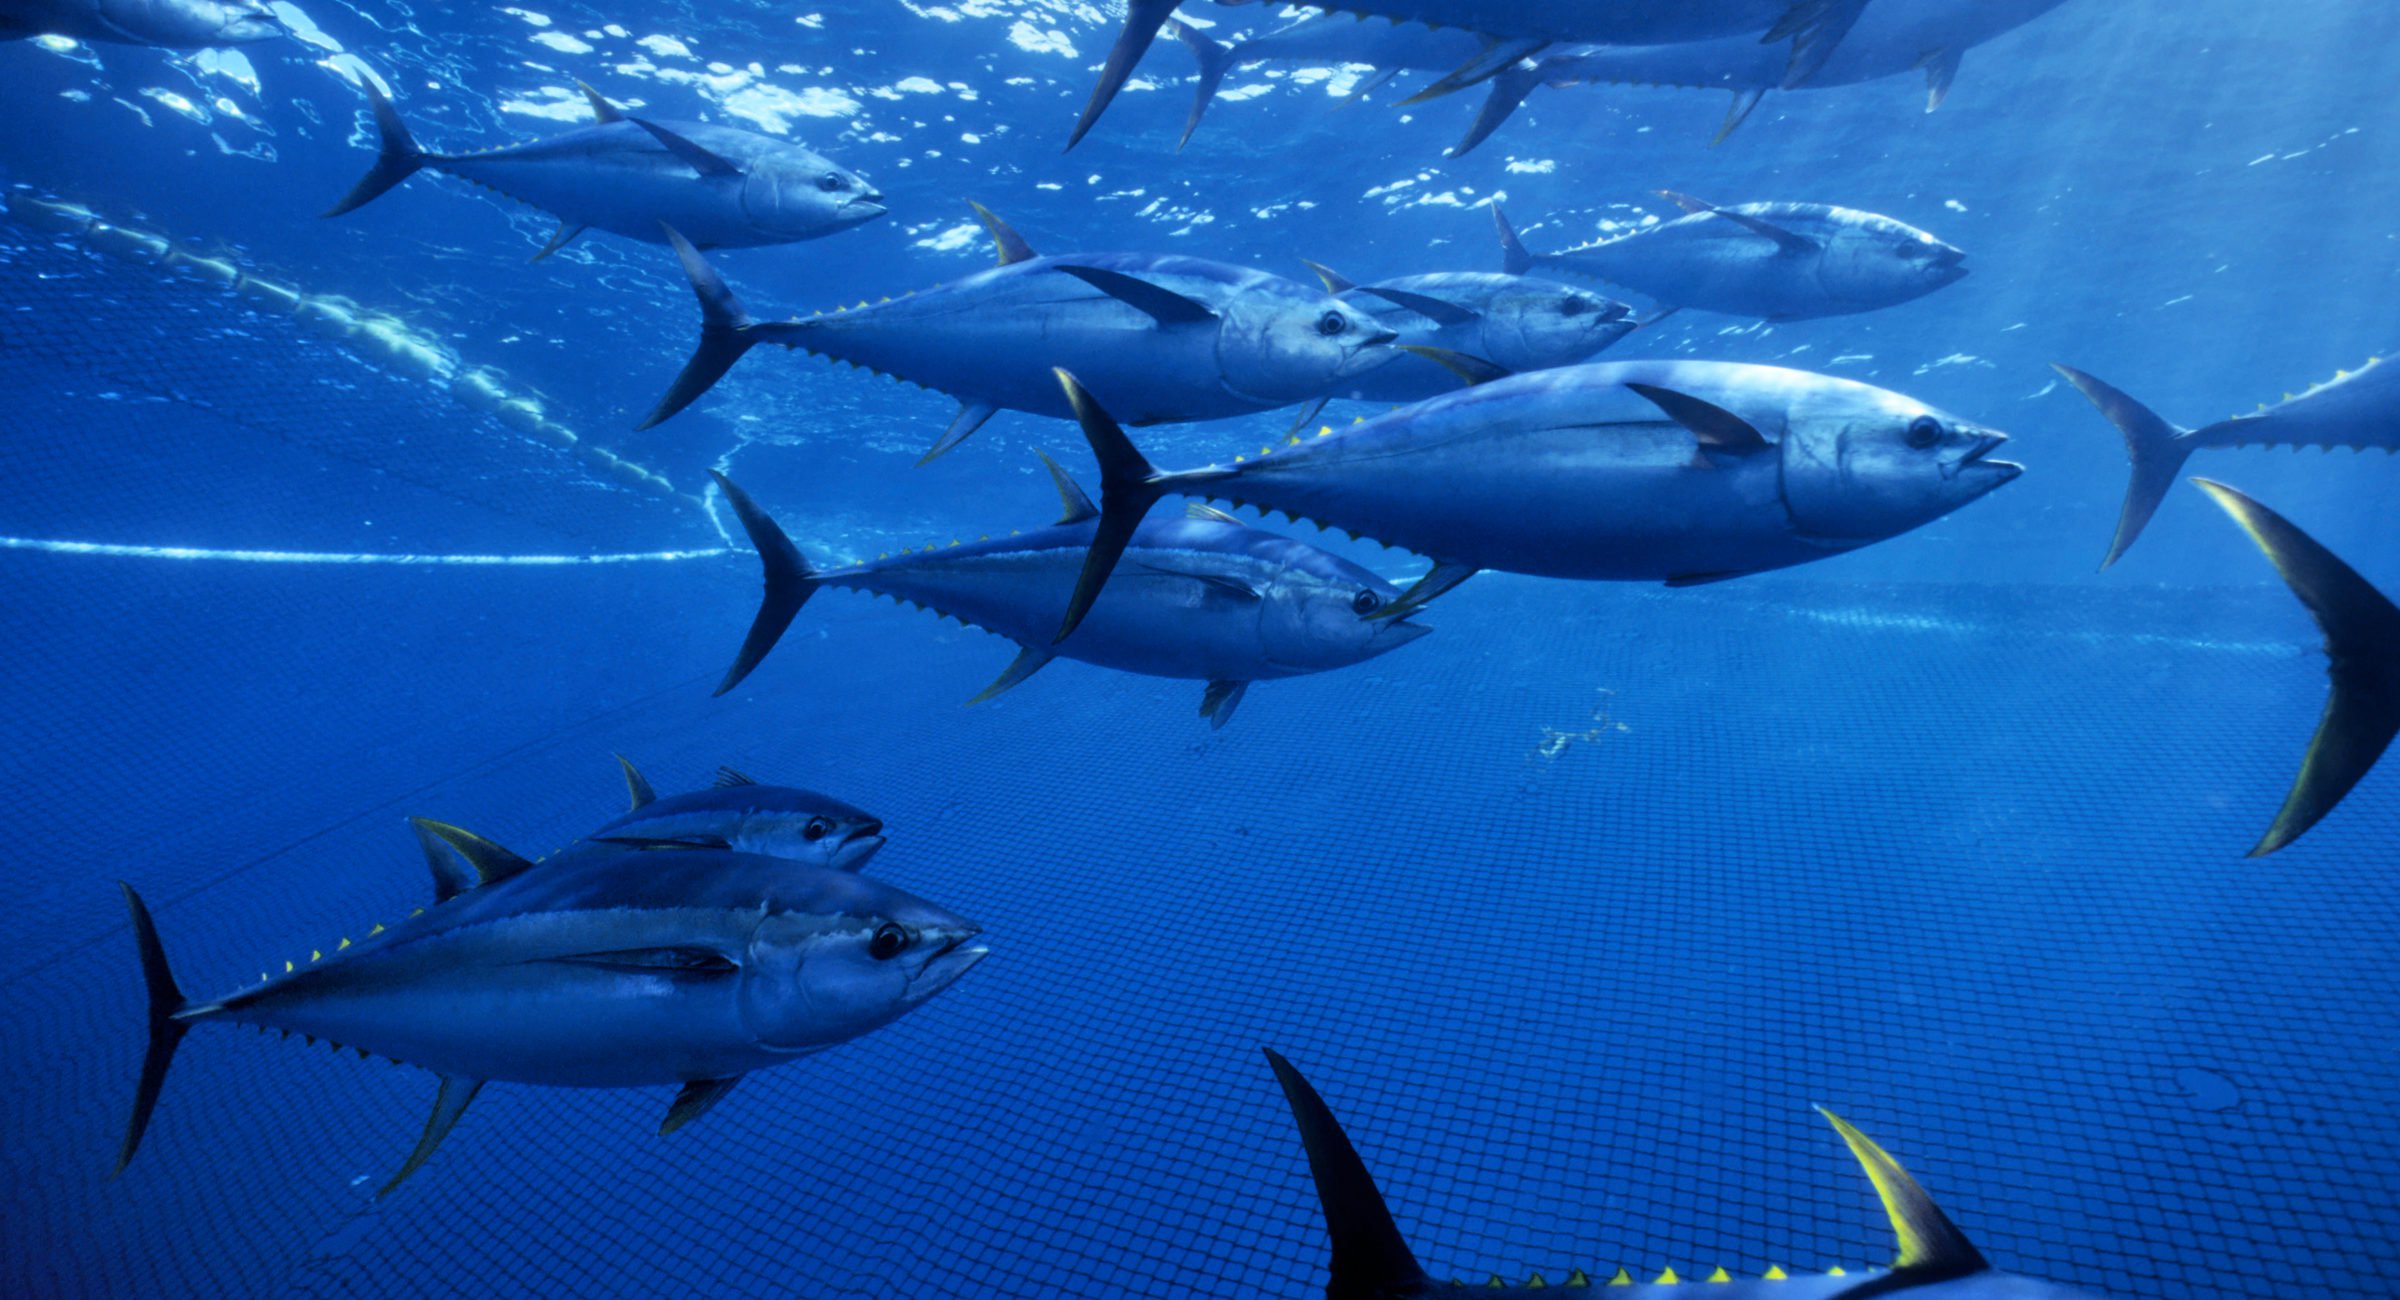 WCPO bigeye and yellowfin tuna stocks remain healthy